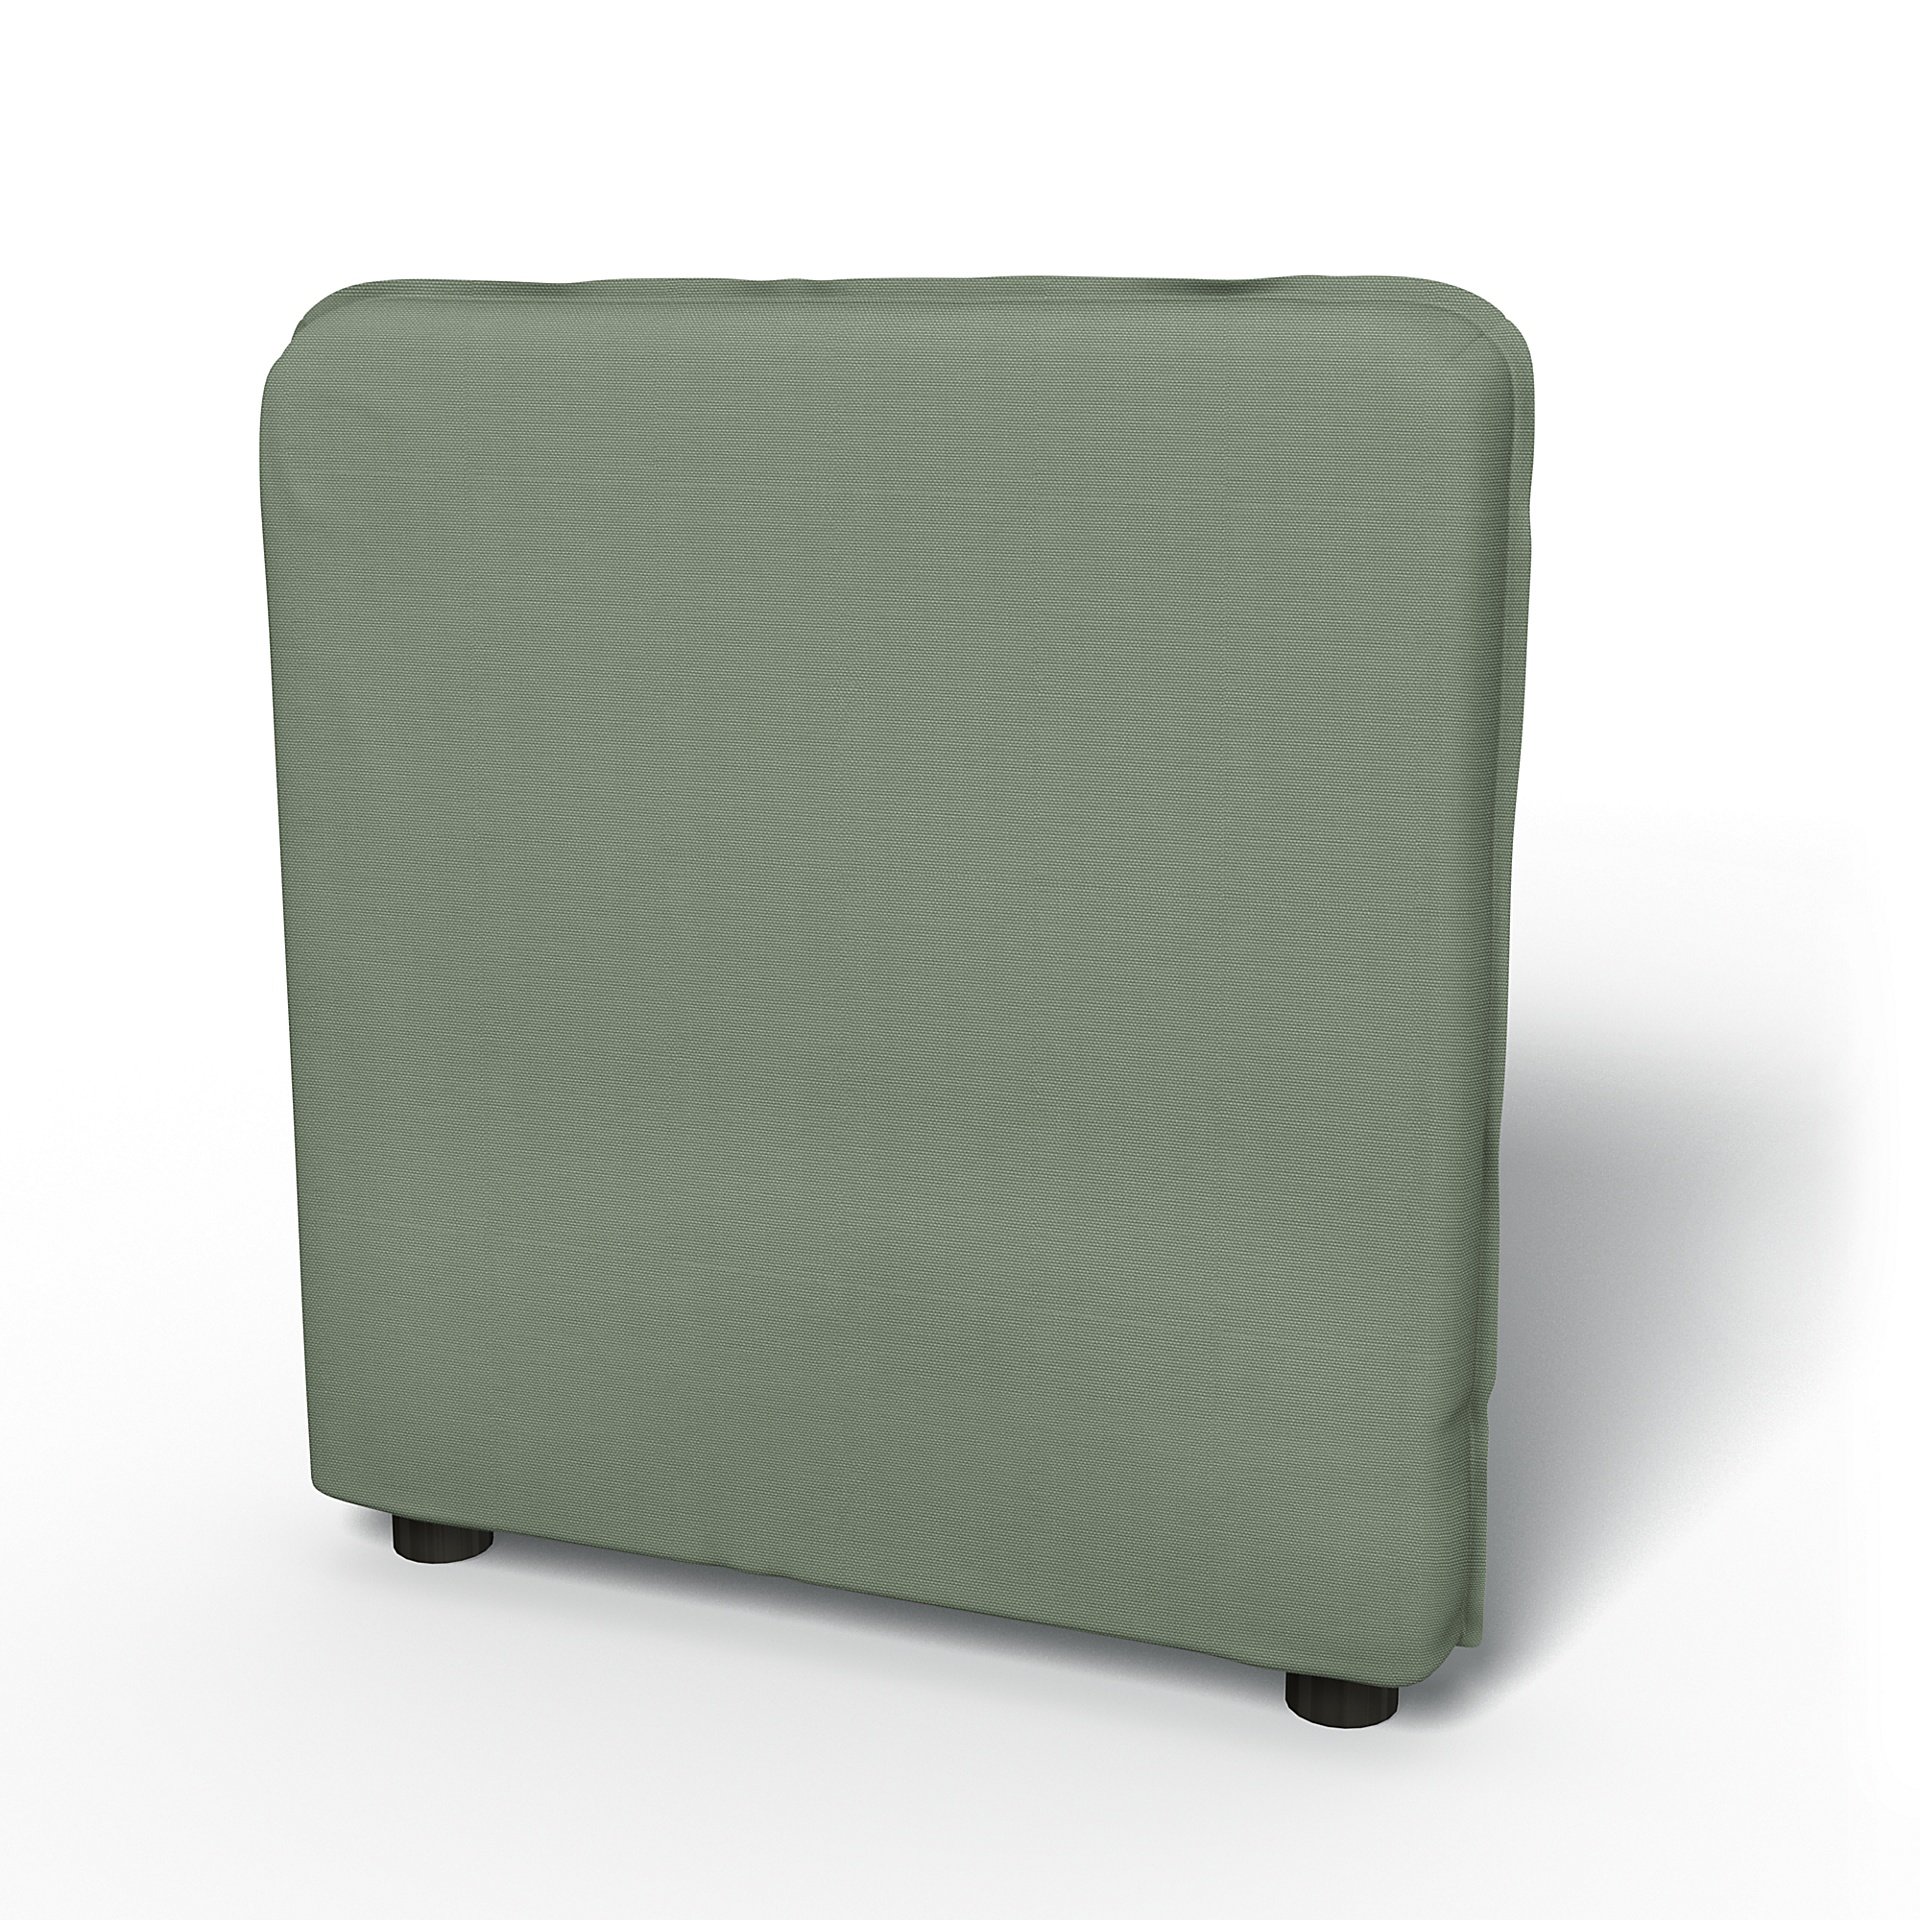 IKEA - Vallentuna Armrest Cover (80x60x13cm), Seagrass, Cotton - Bemz